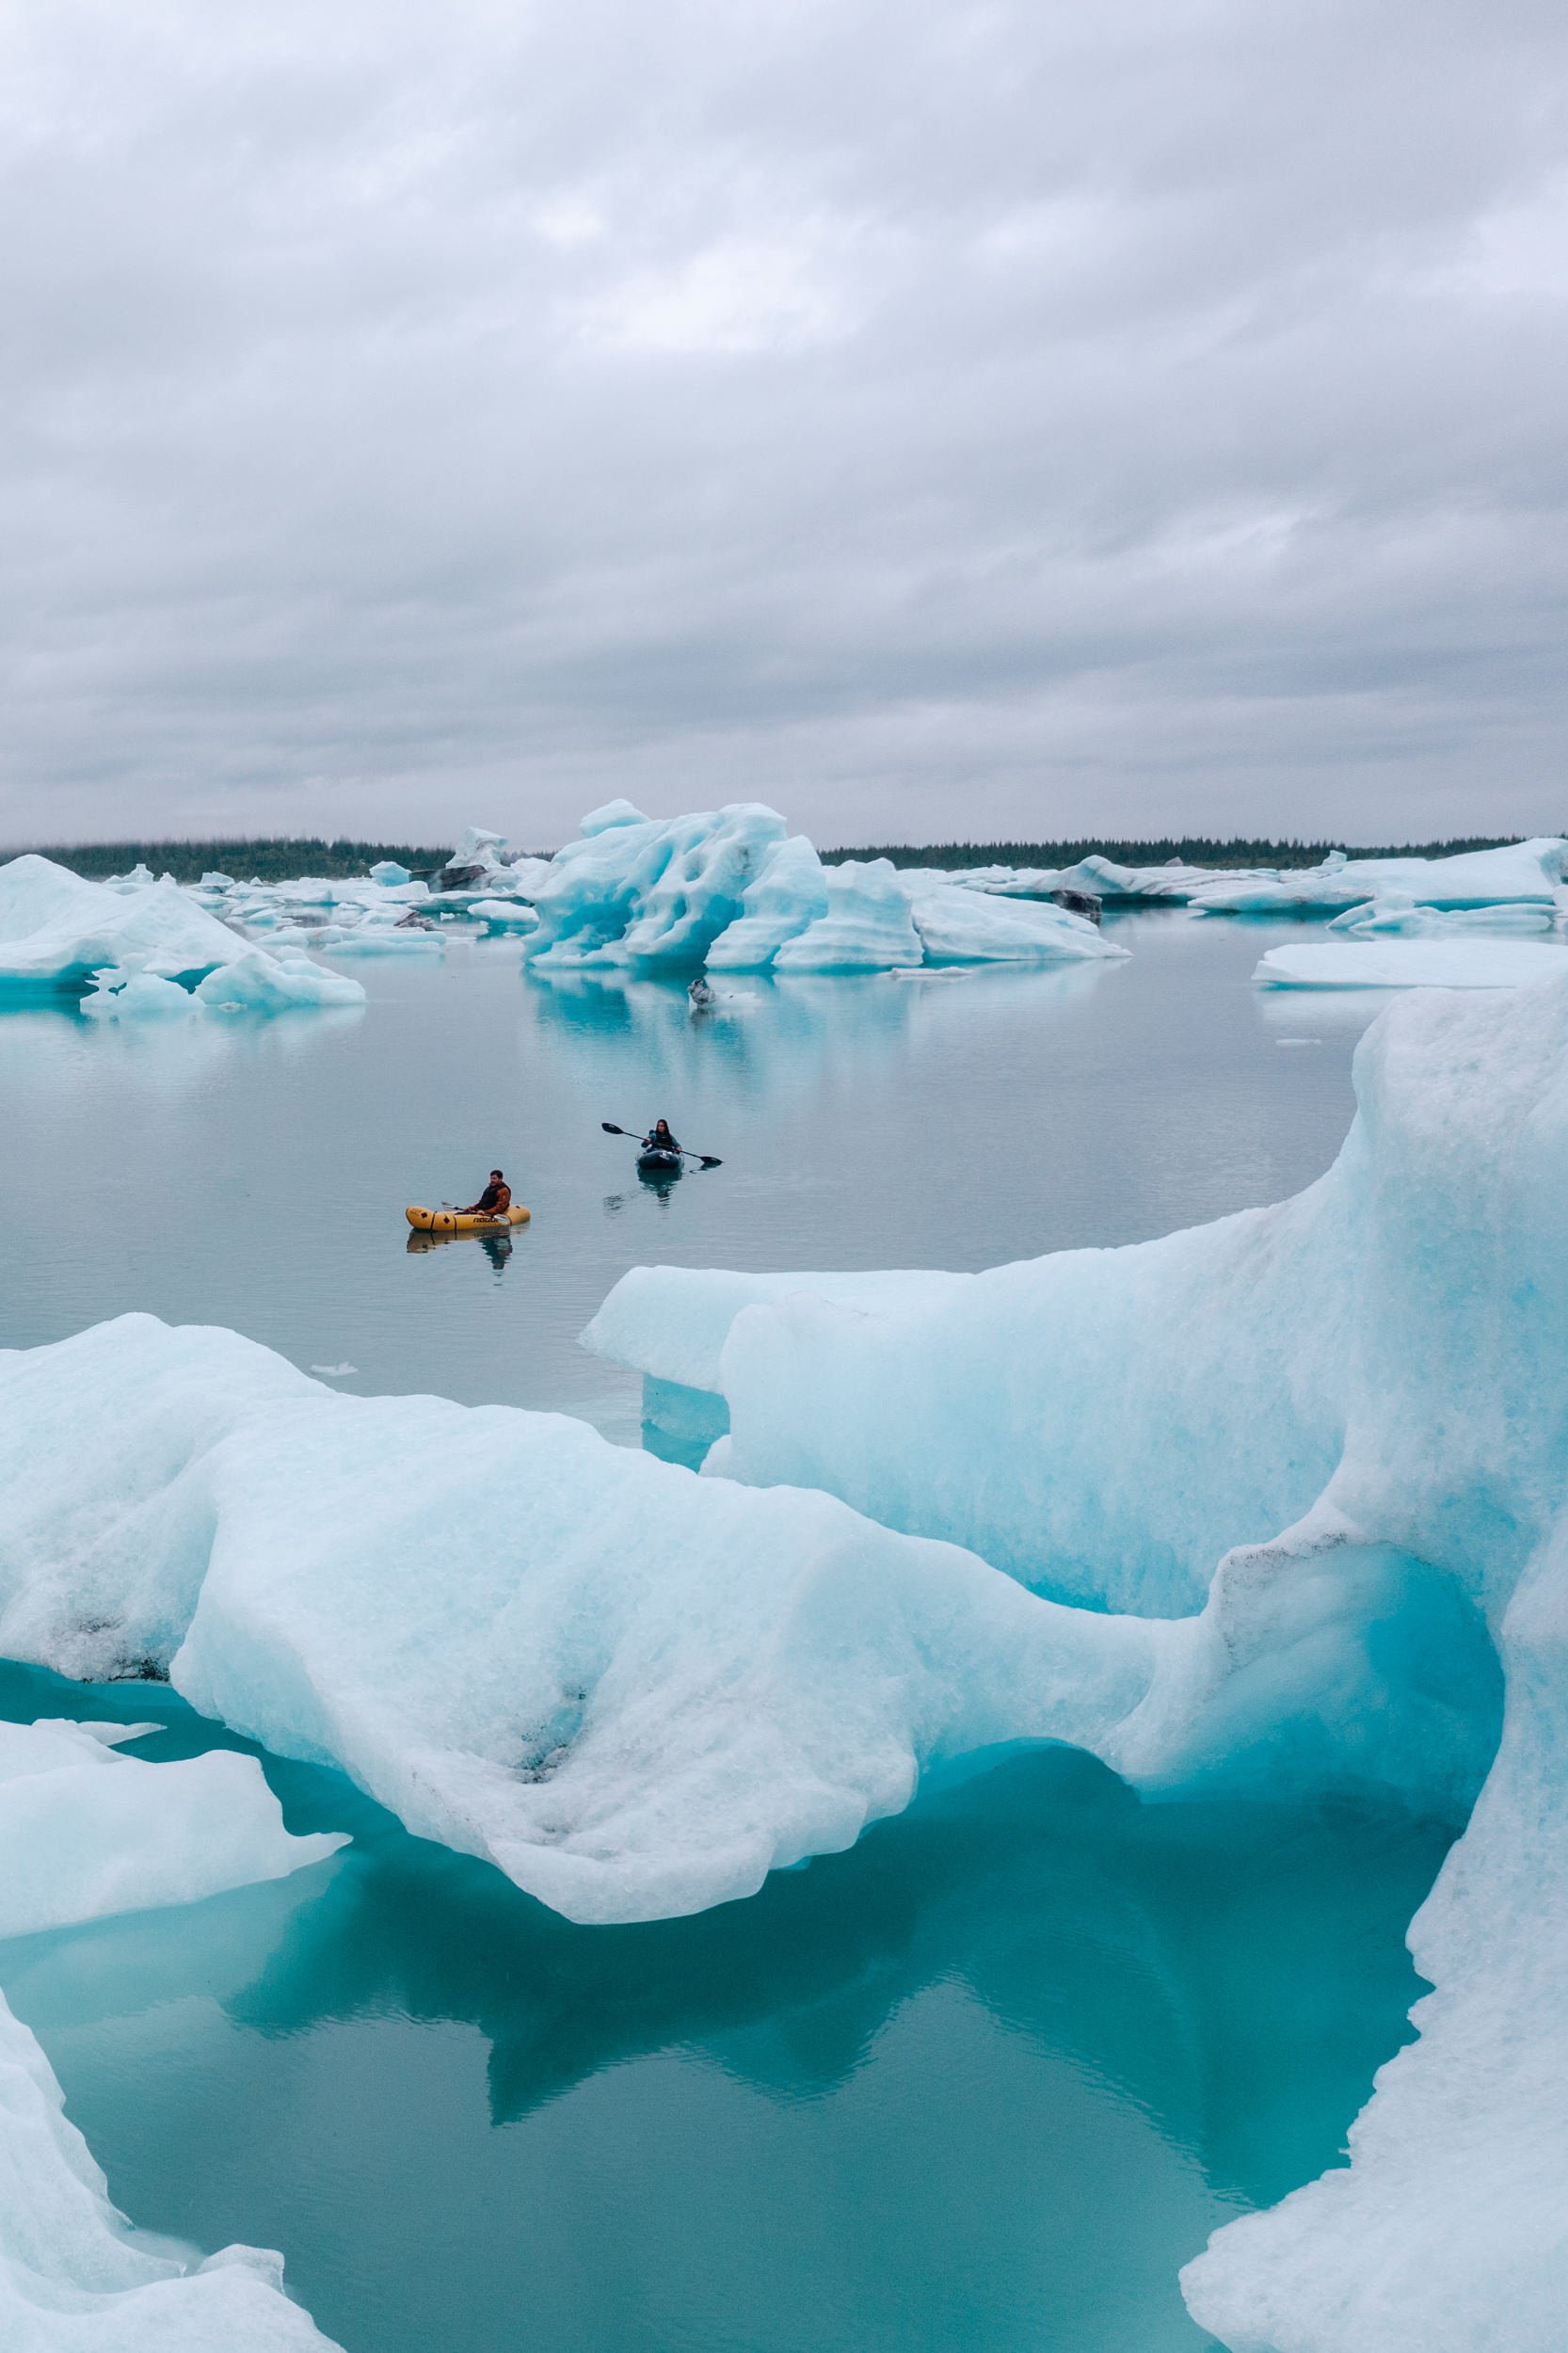 Kayaking with Icebergs Elopement Wedding in Alaska | The Hearnes Adventure Photography